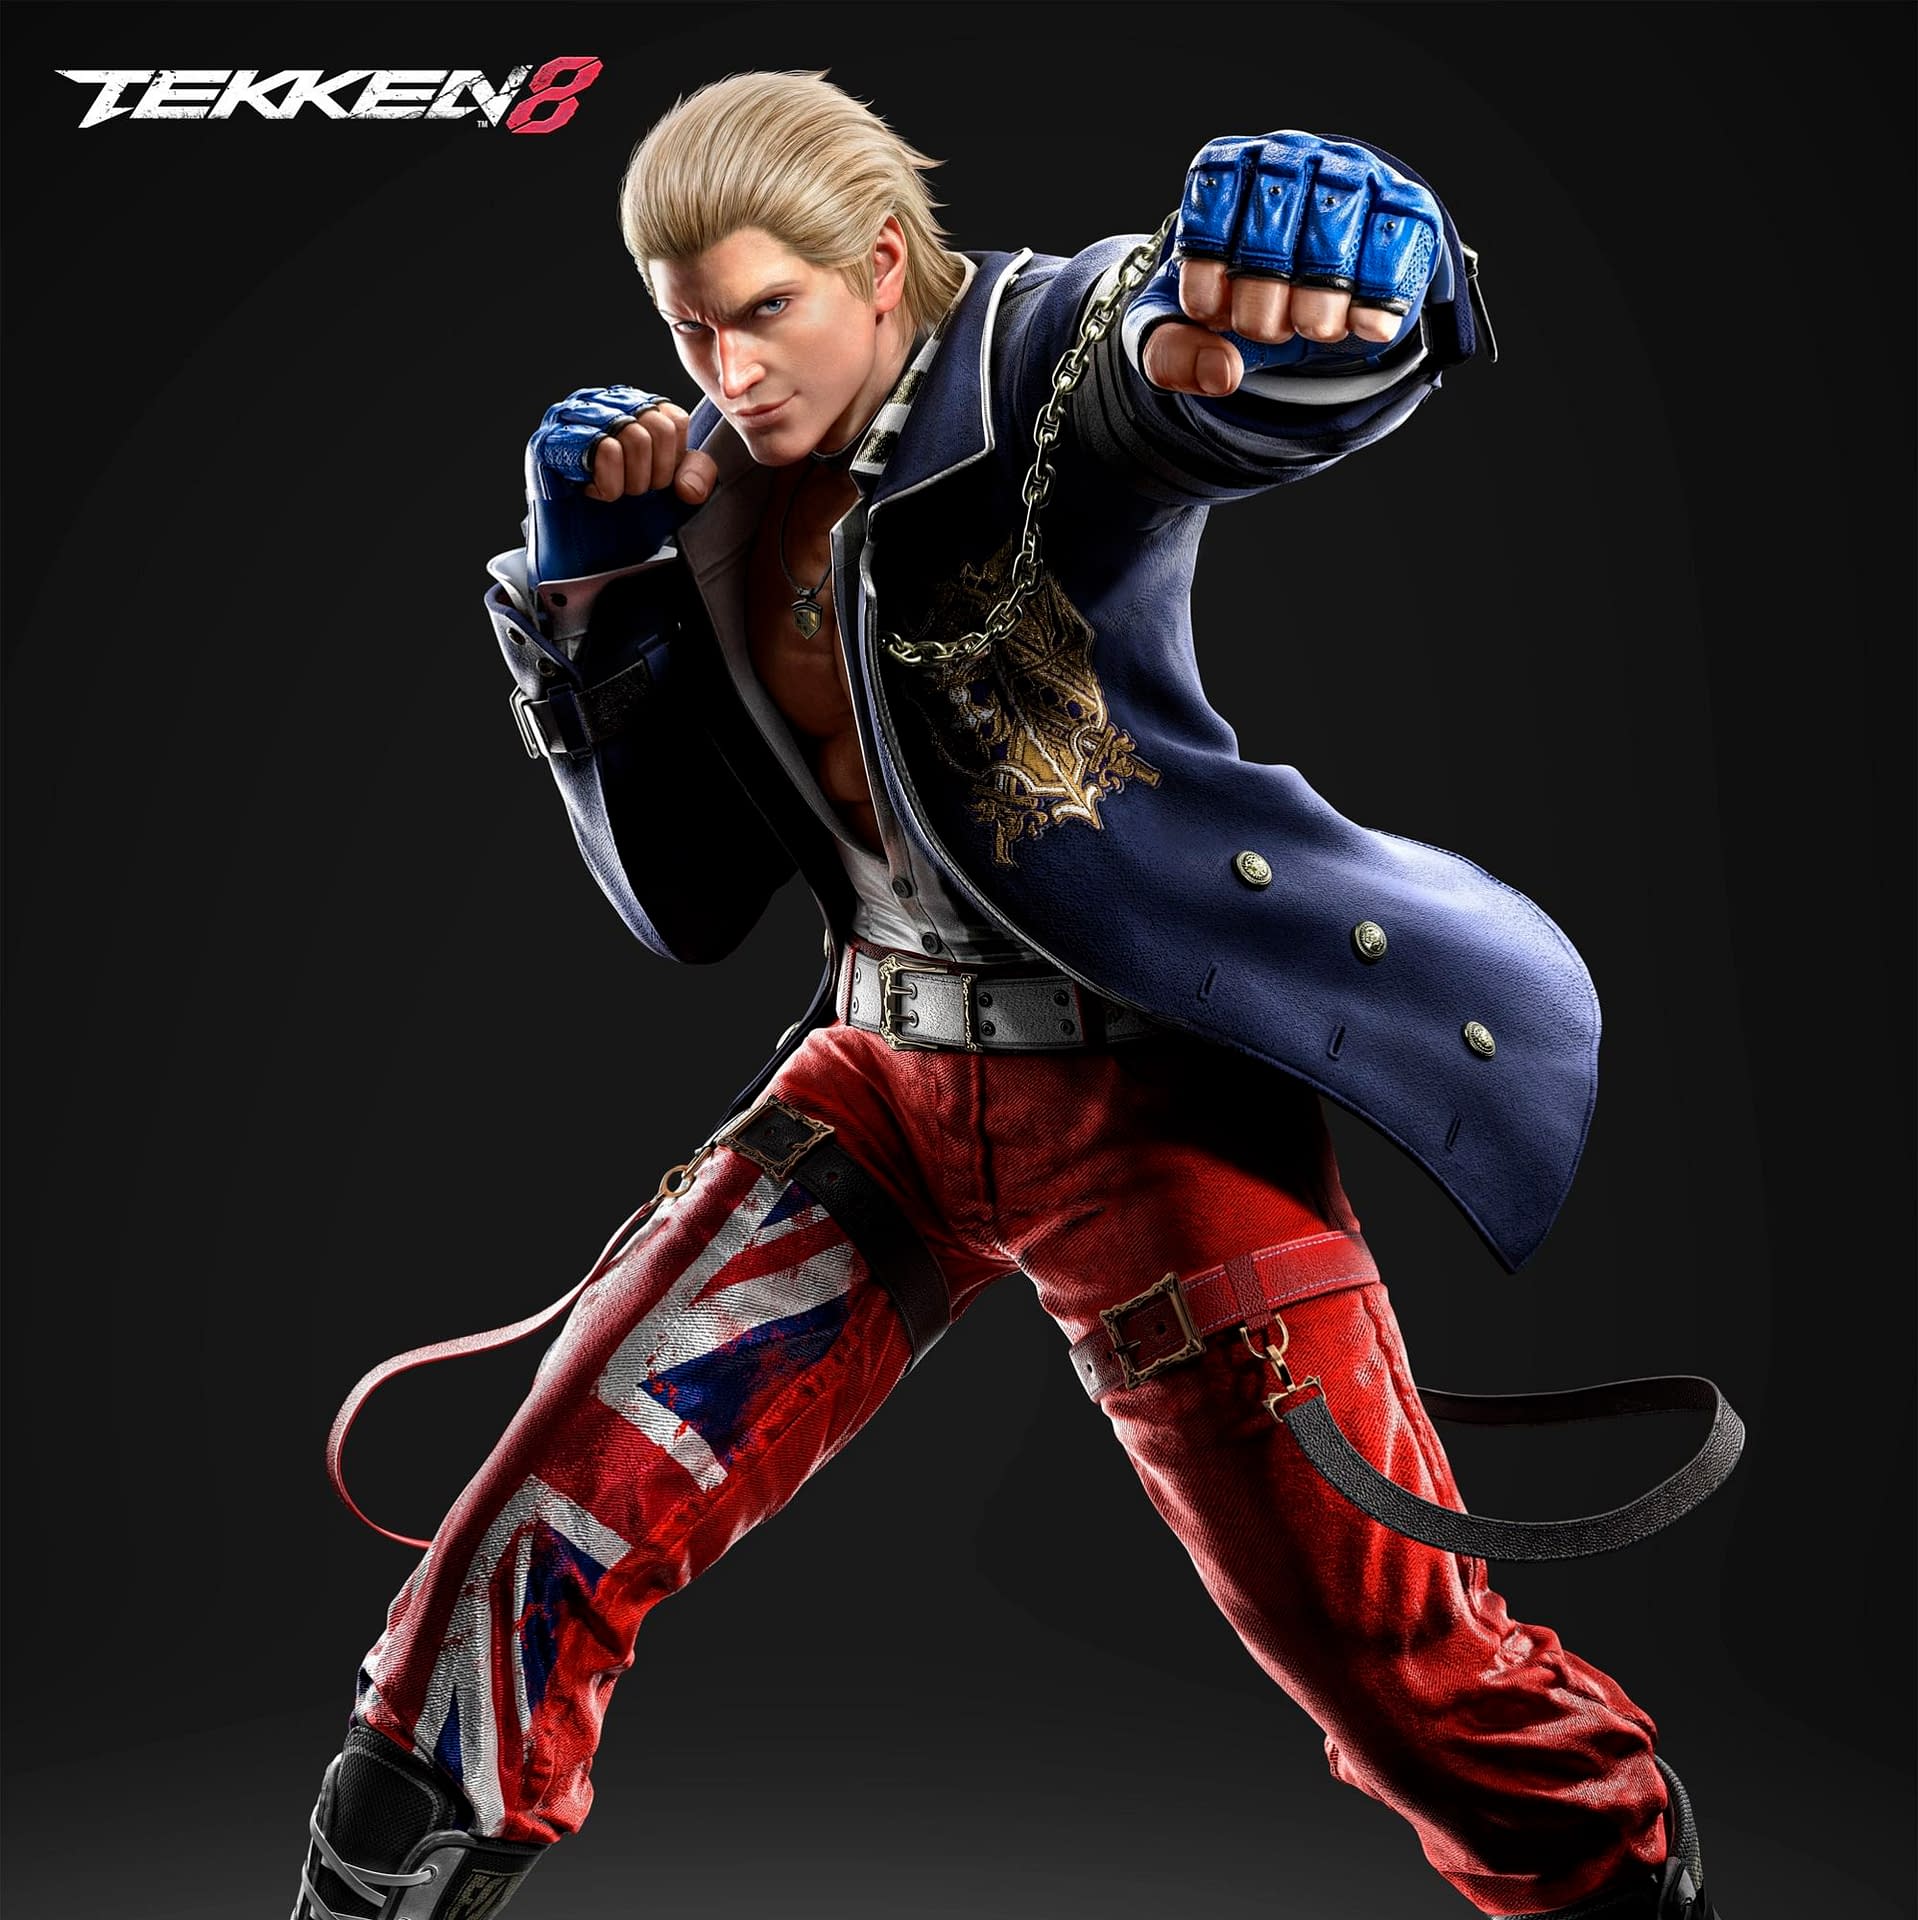 Tekken 8: Watch Steven Fox's Gameplay Trailer